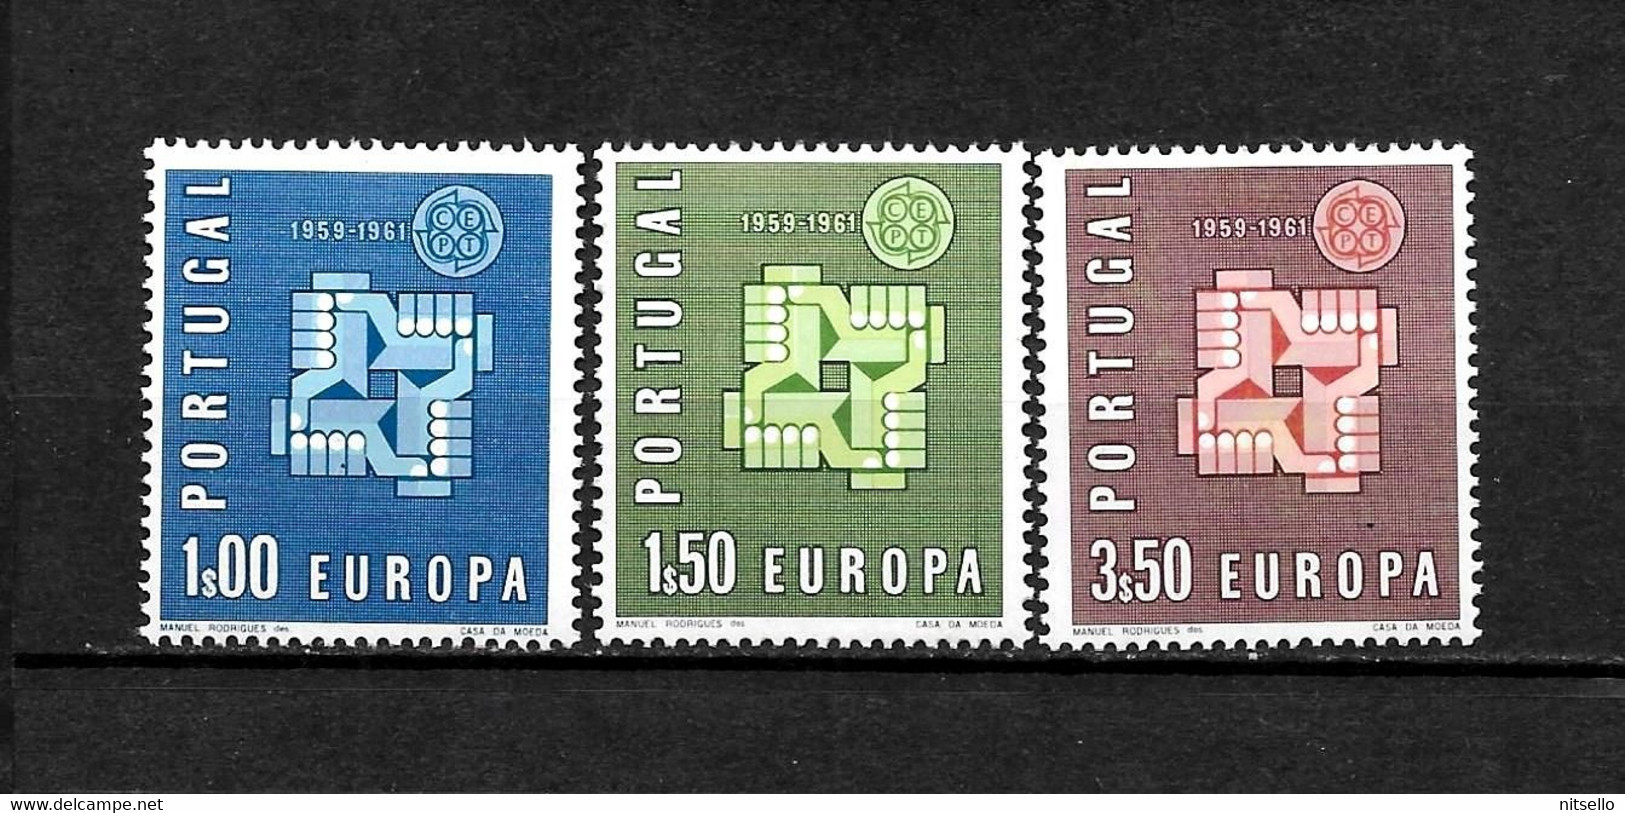 LOTE 1707  ////  PORTUGAL  YVERT Nº: 888/890 **MNH //  CATALOG./COTE: 5€   ¡¡¡ LIQUIDATION !!! - Unused Stamps